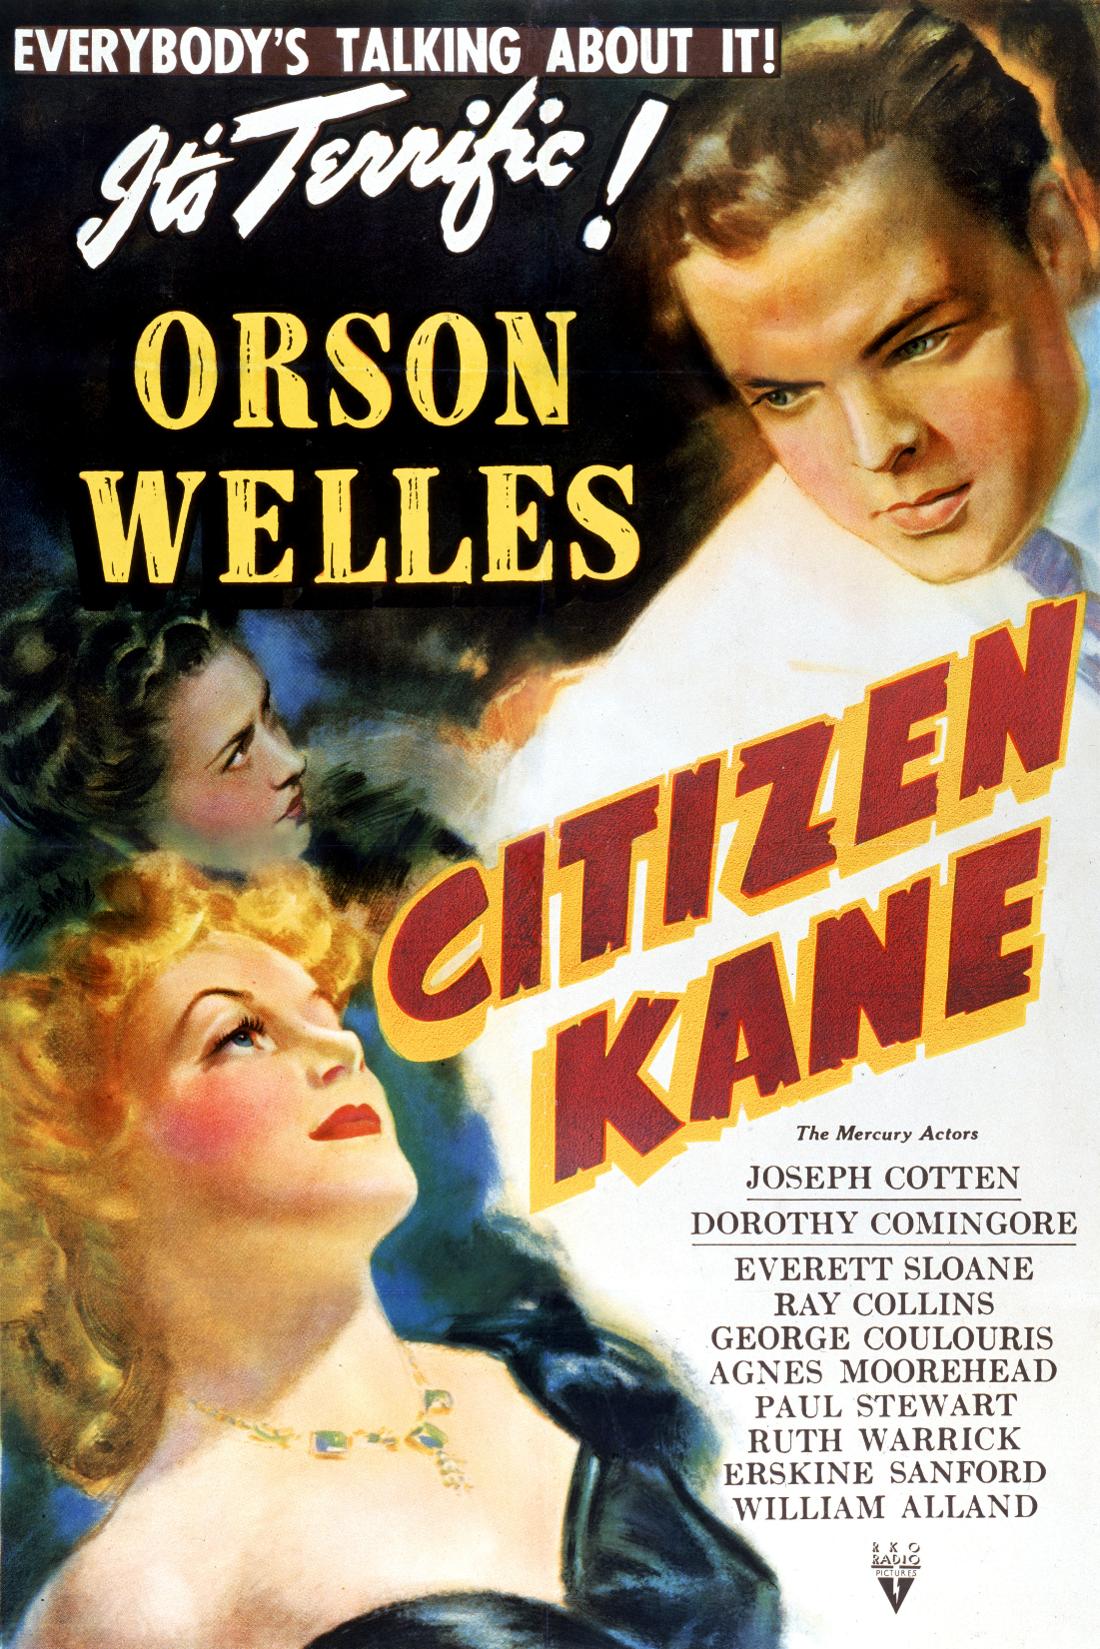 [RANKING FILMES] - Cidadão Kane (1941) / Jumanji (1995) - Página 2 VyNzkwMjQ5NzM_._V1_